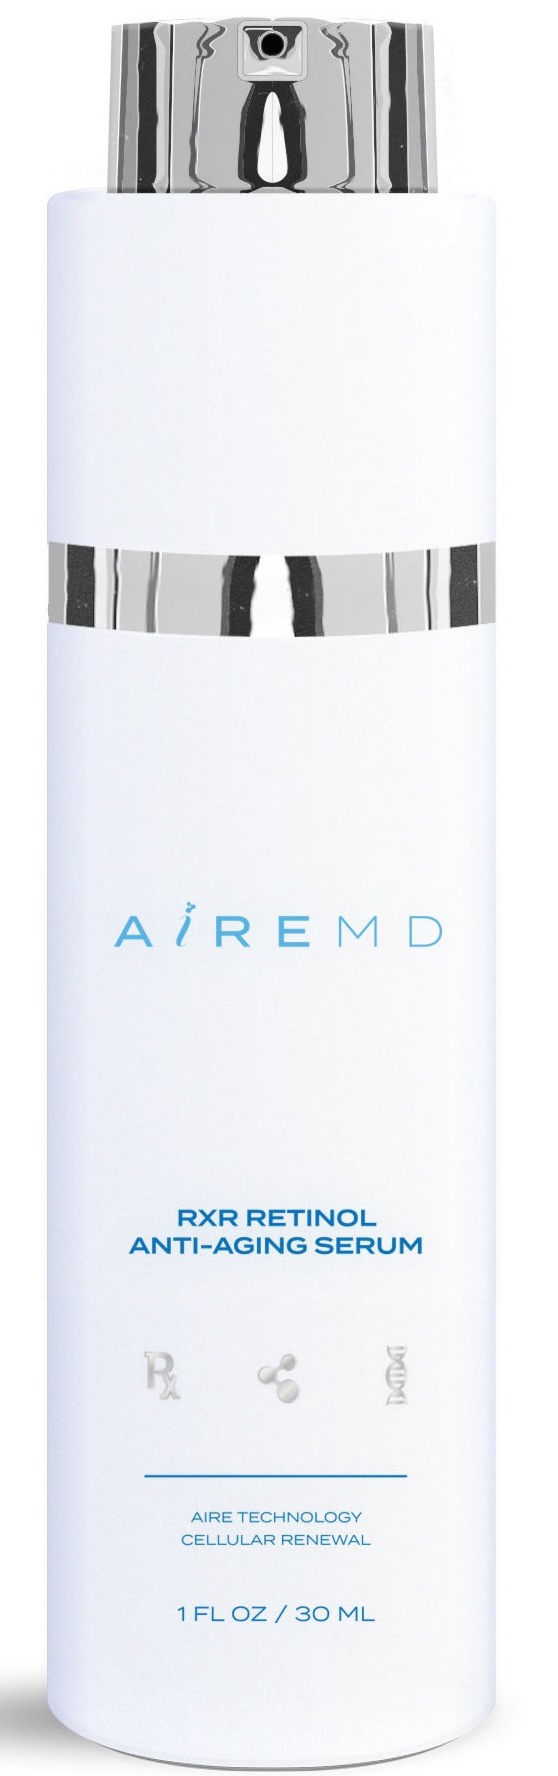 AiREMD RXR Retinol Anti-Aging Serum